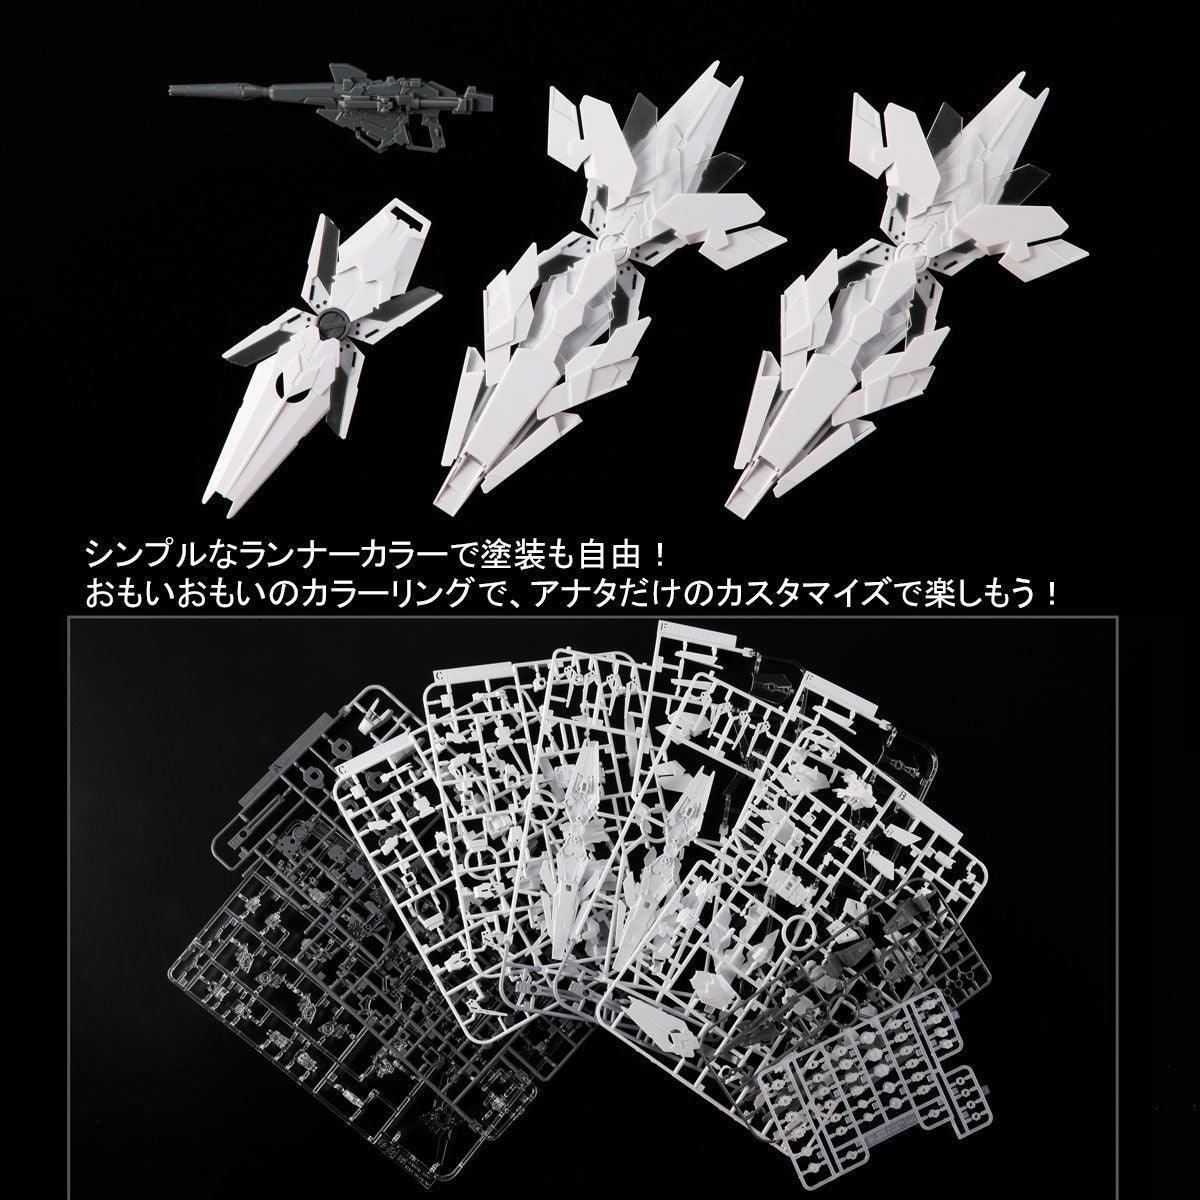 Bandai HG 1/144 The Gundam Base Limited Unicorn Gundam (Painting Model) - Kidultverse